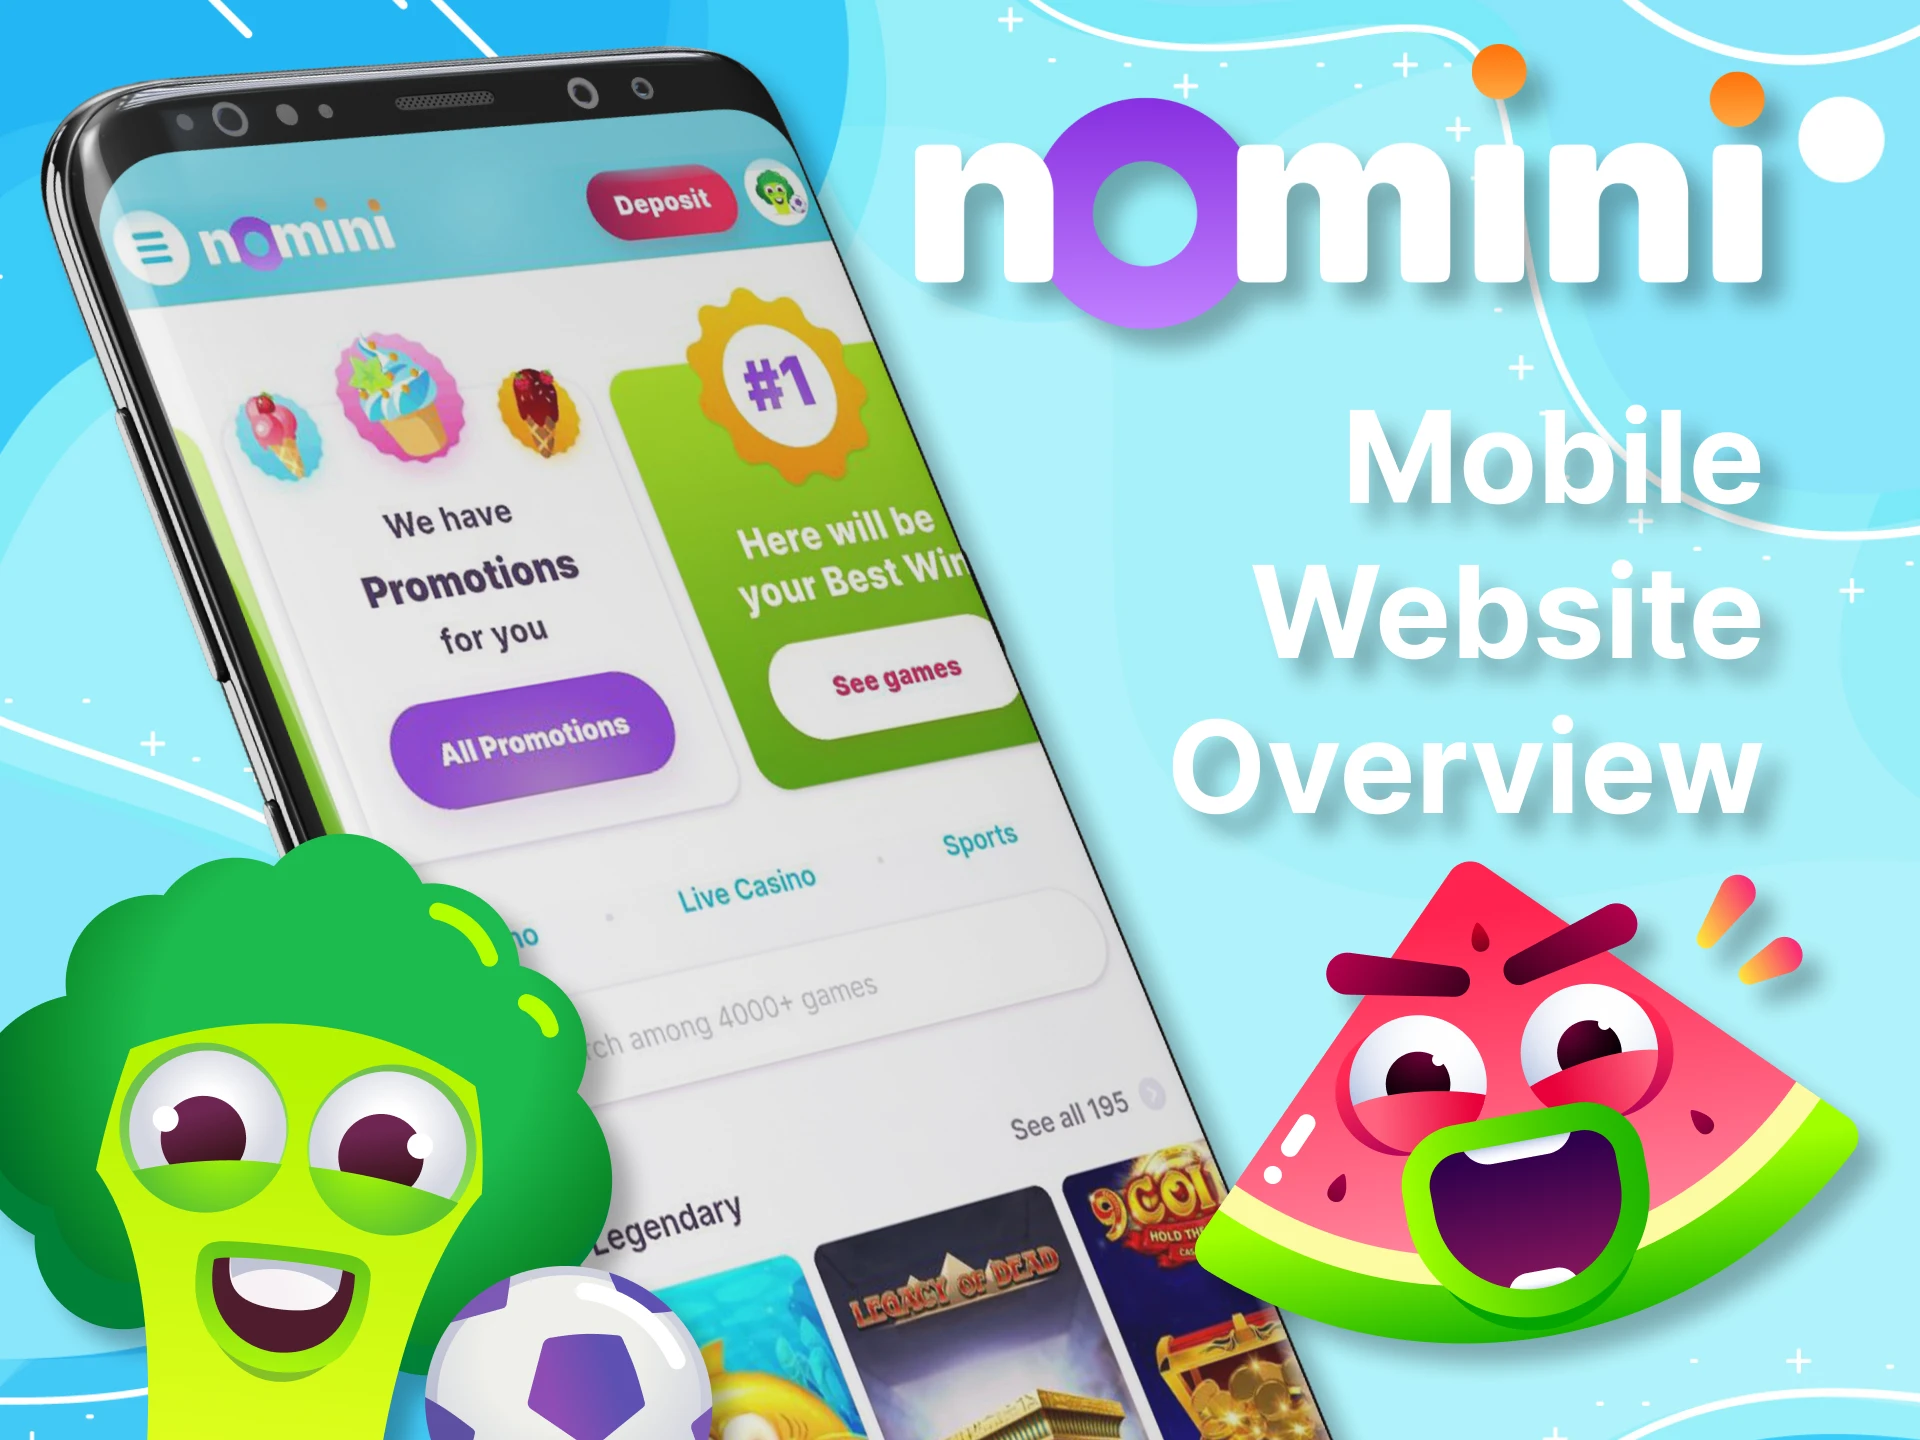 Nomini has a very handy mobile website.